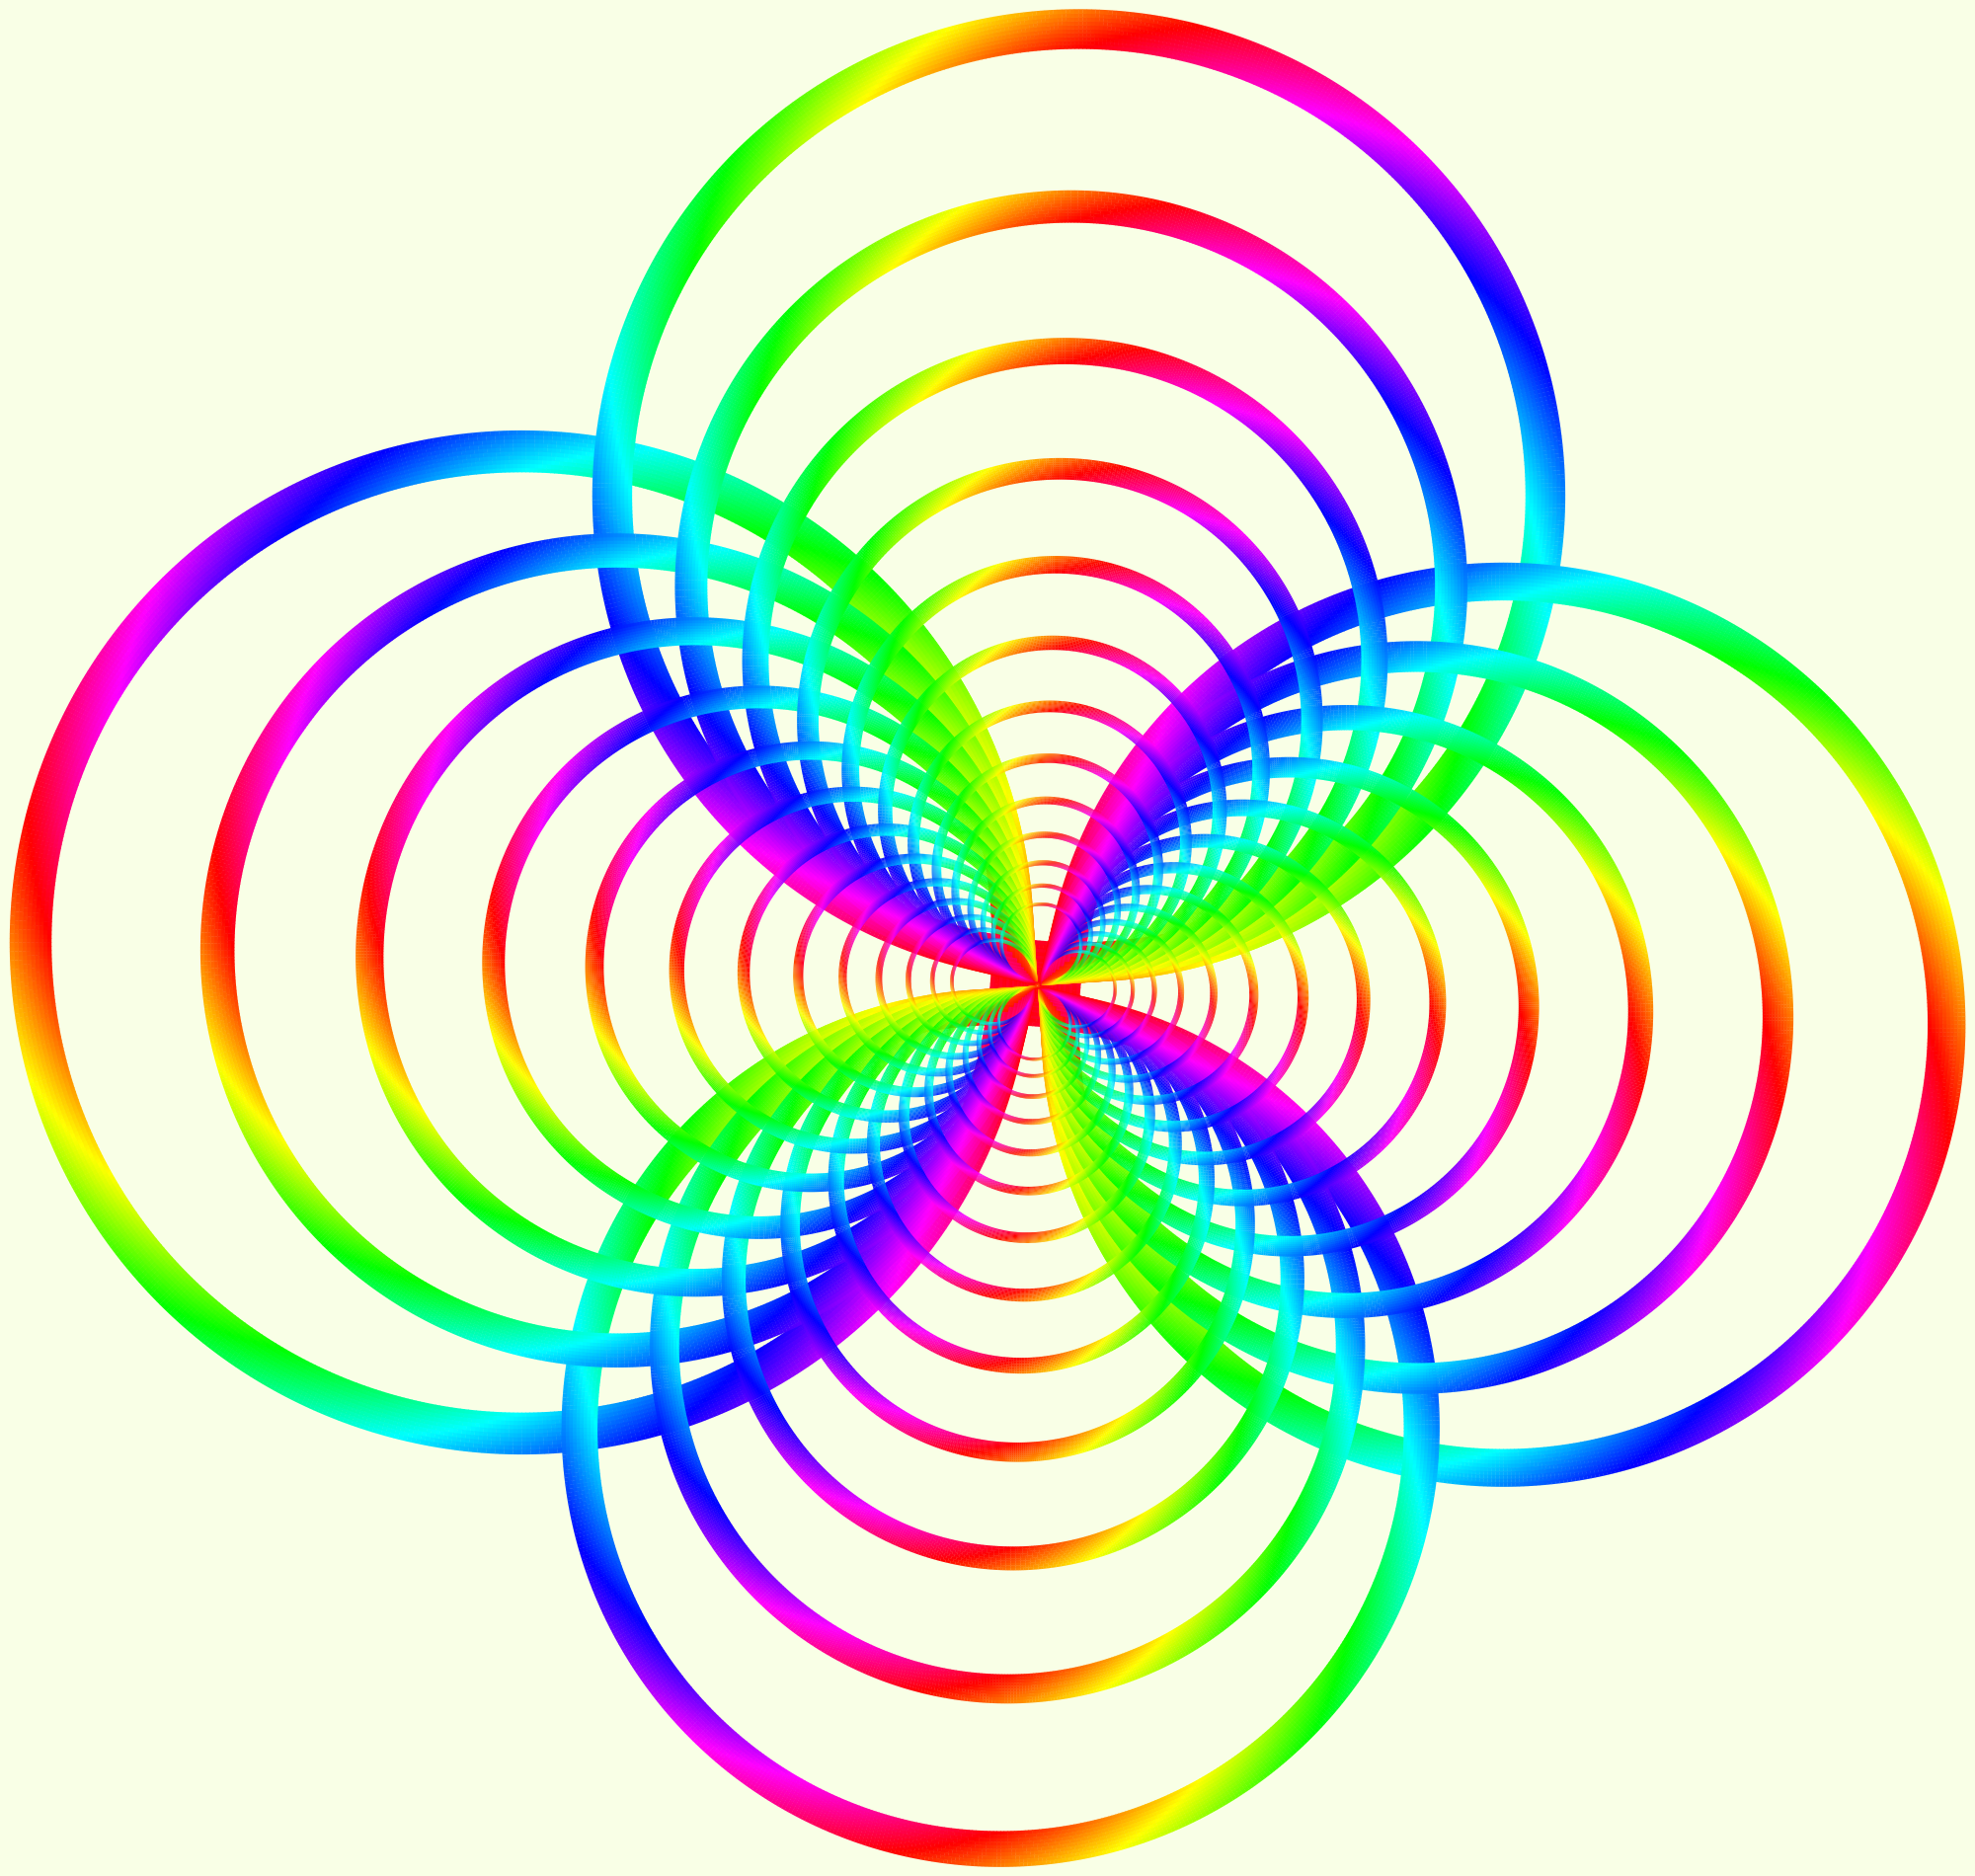 Fractal 004: Color circles by hxseven on DeviantArt